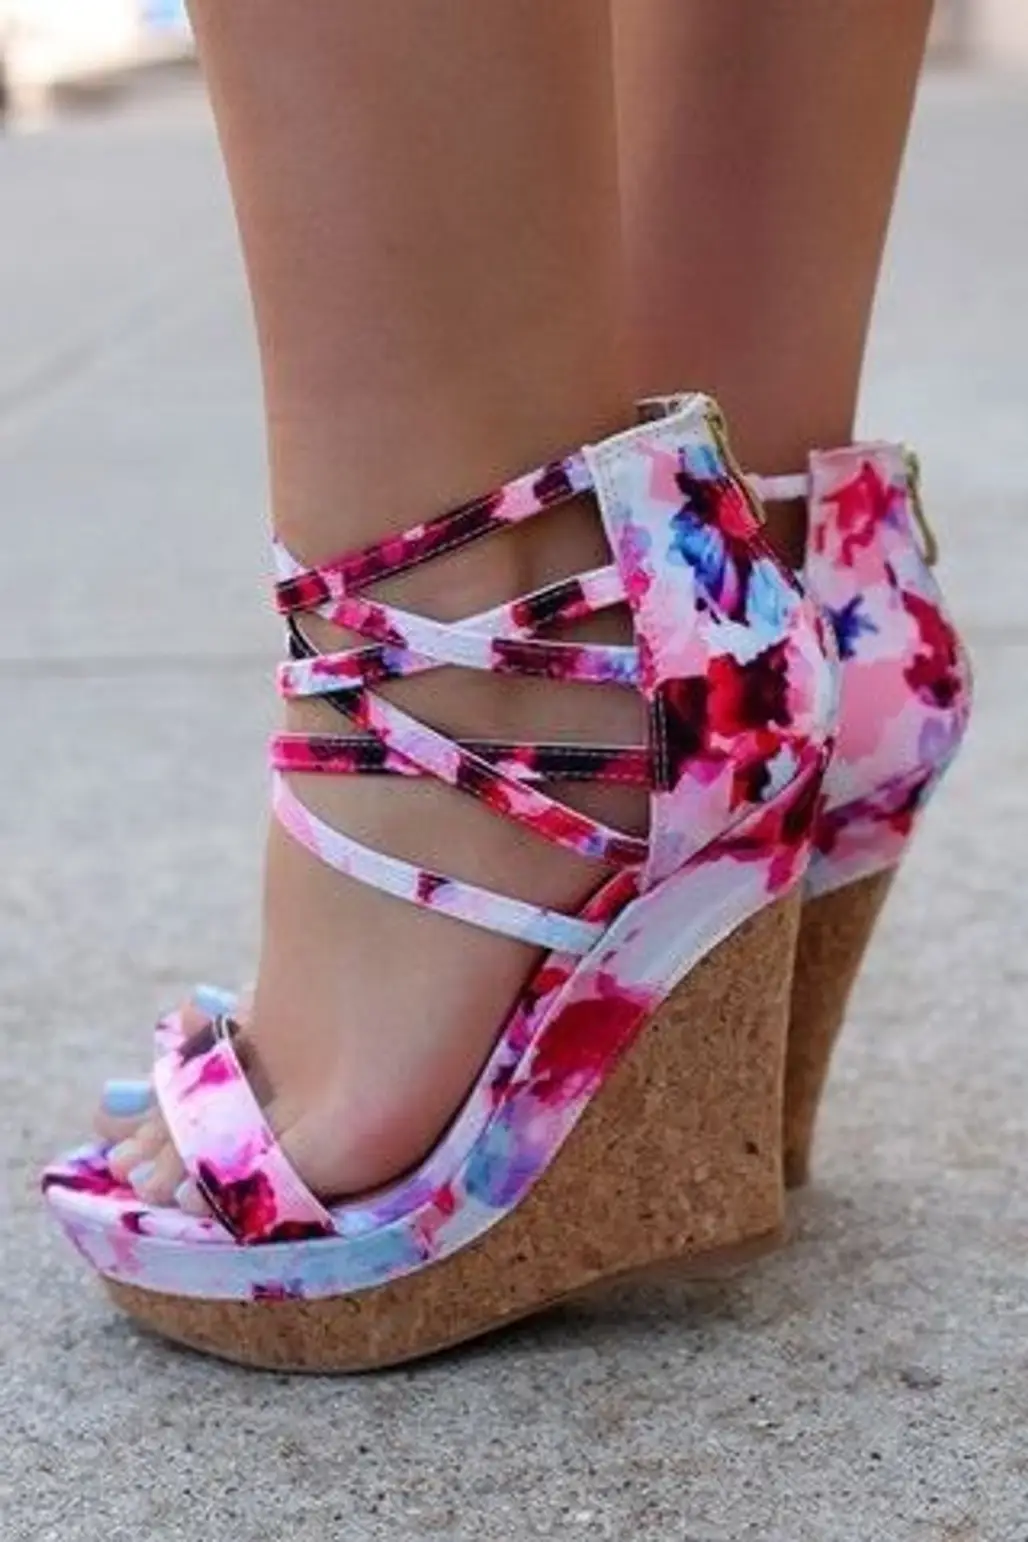 footwear,pink,high heeled footwear,shoe,leg,